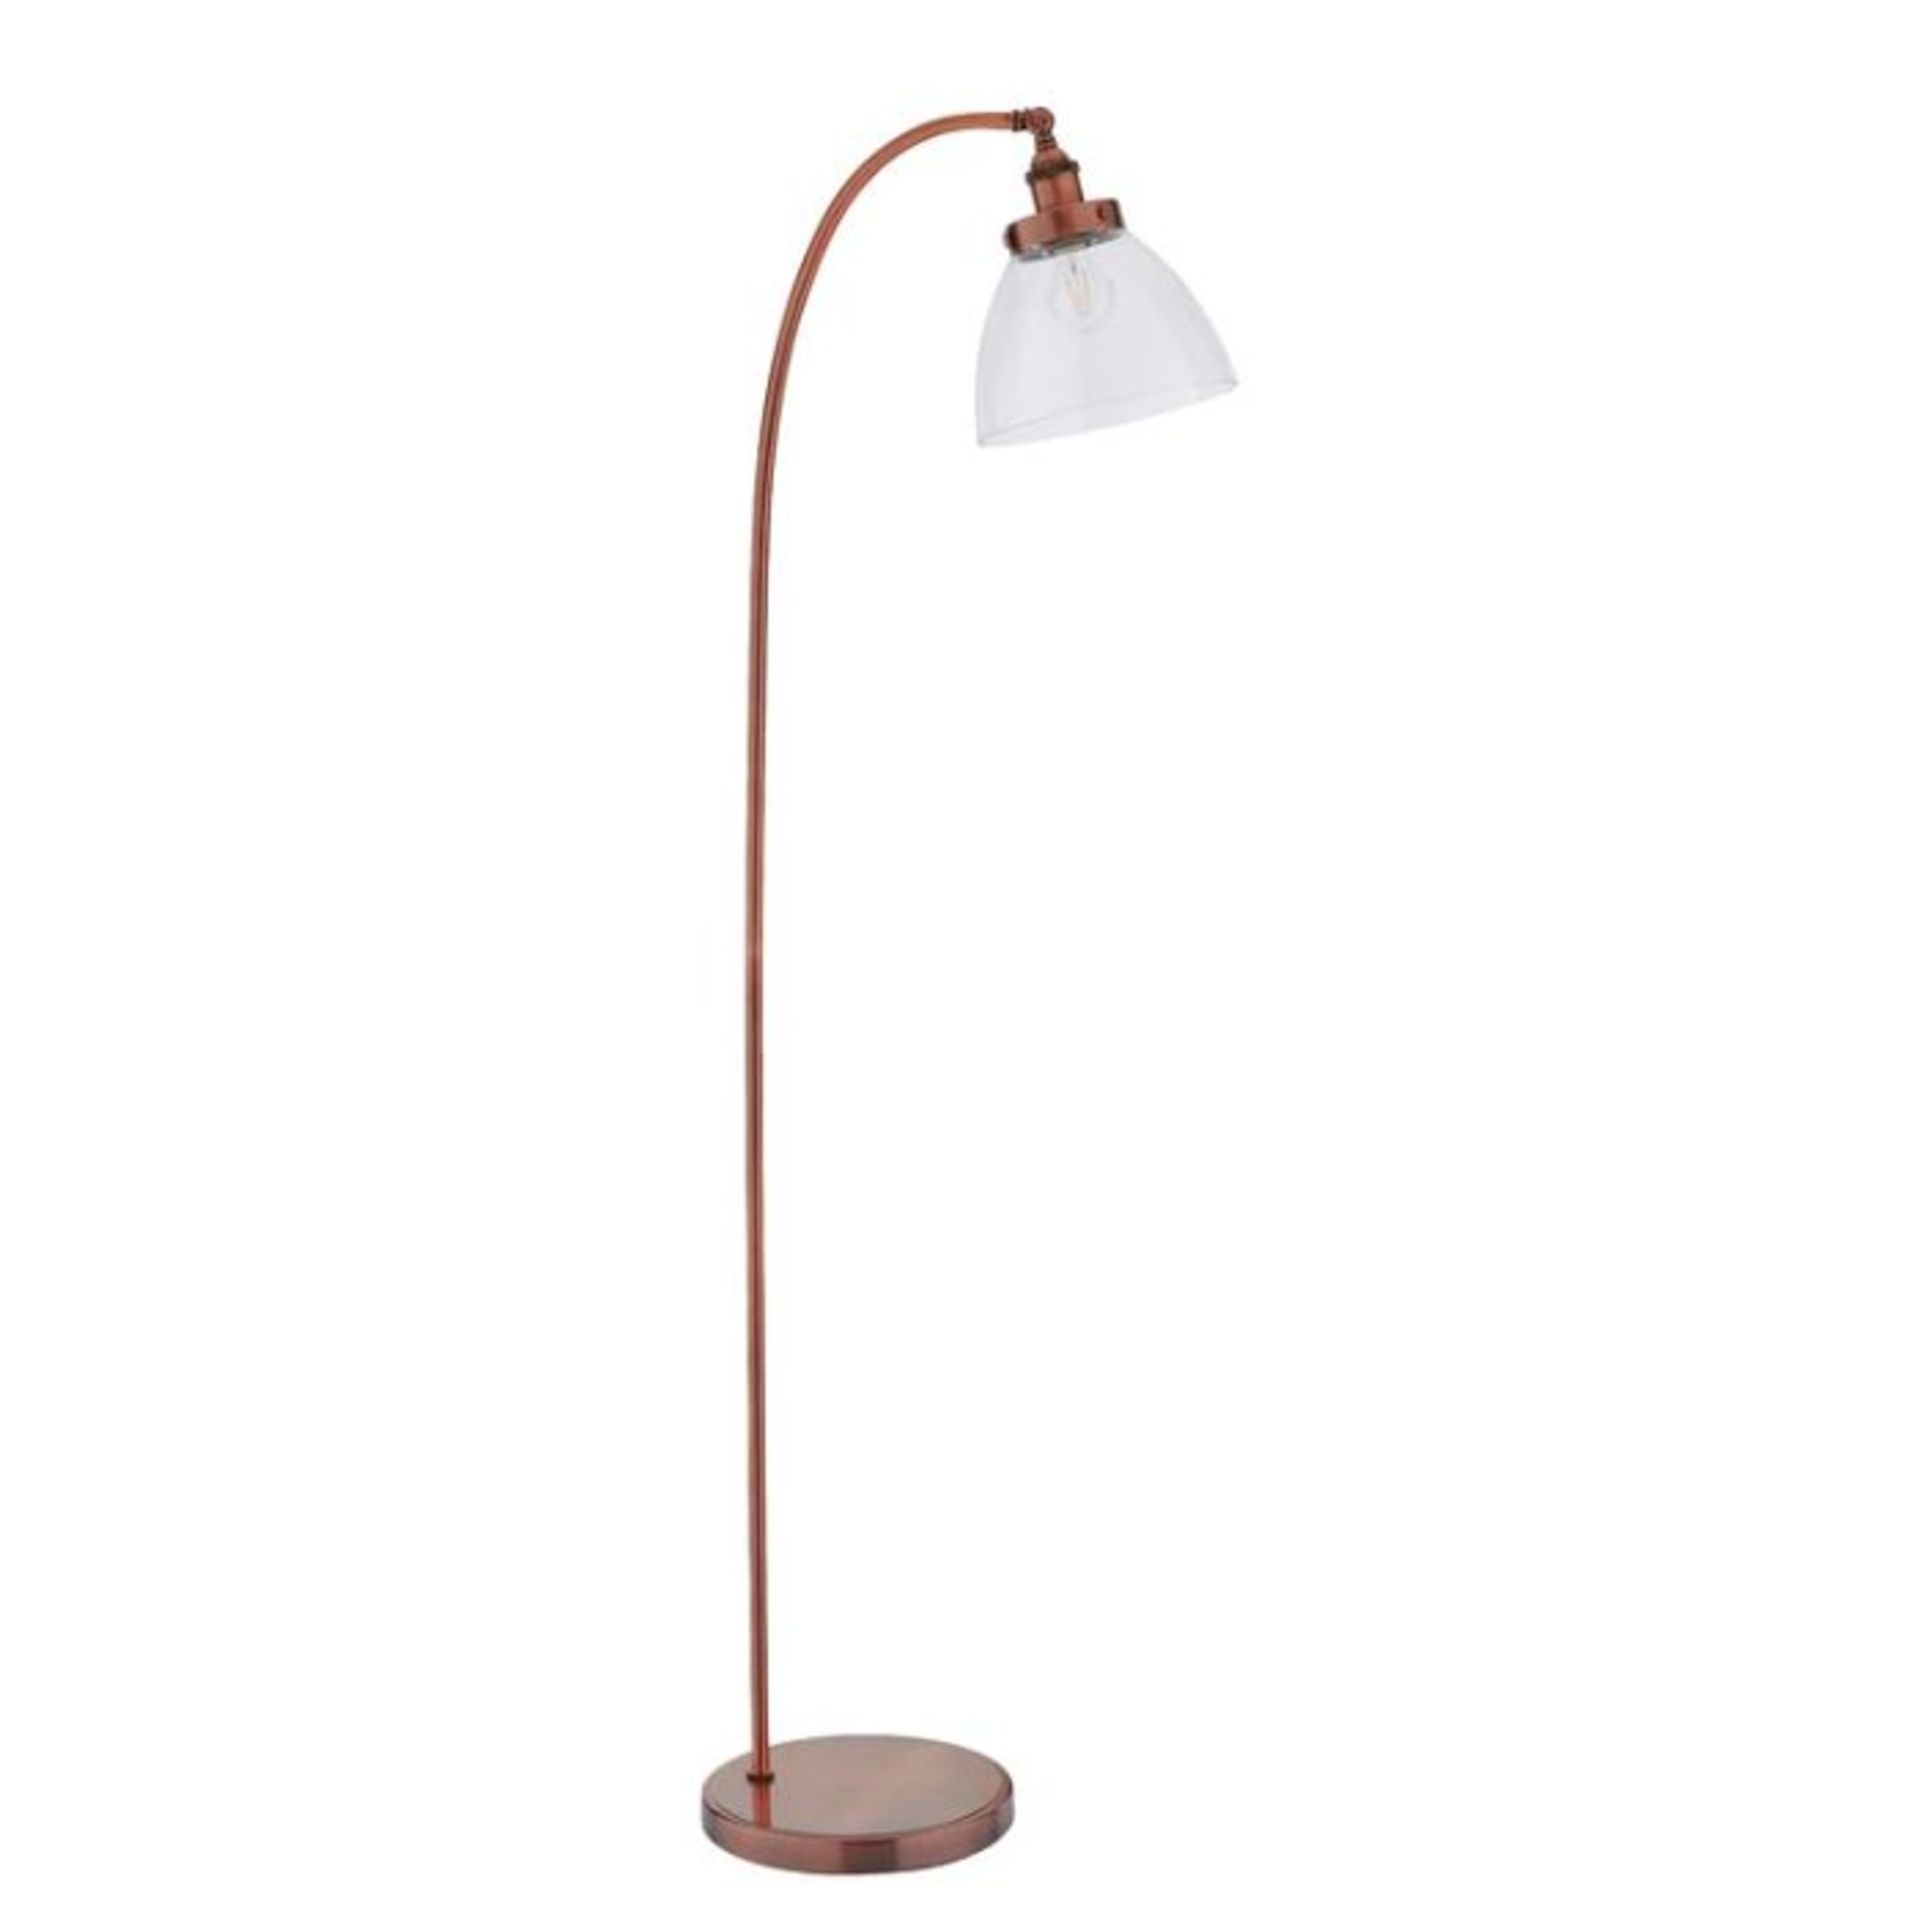 Zipcode Design, Henrietta 152cm Arched Floor Lamp (COPPER & GLASS FINISH) - RRP £102.99 (